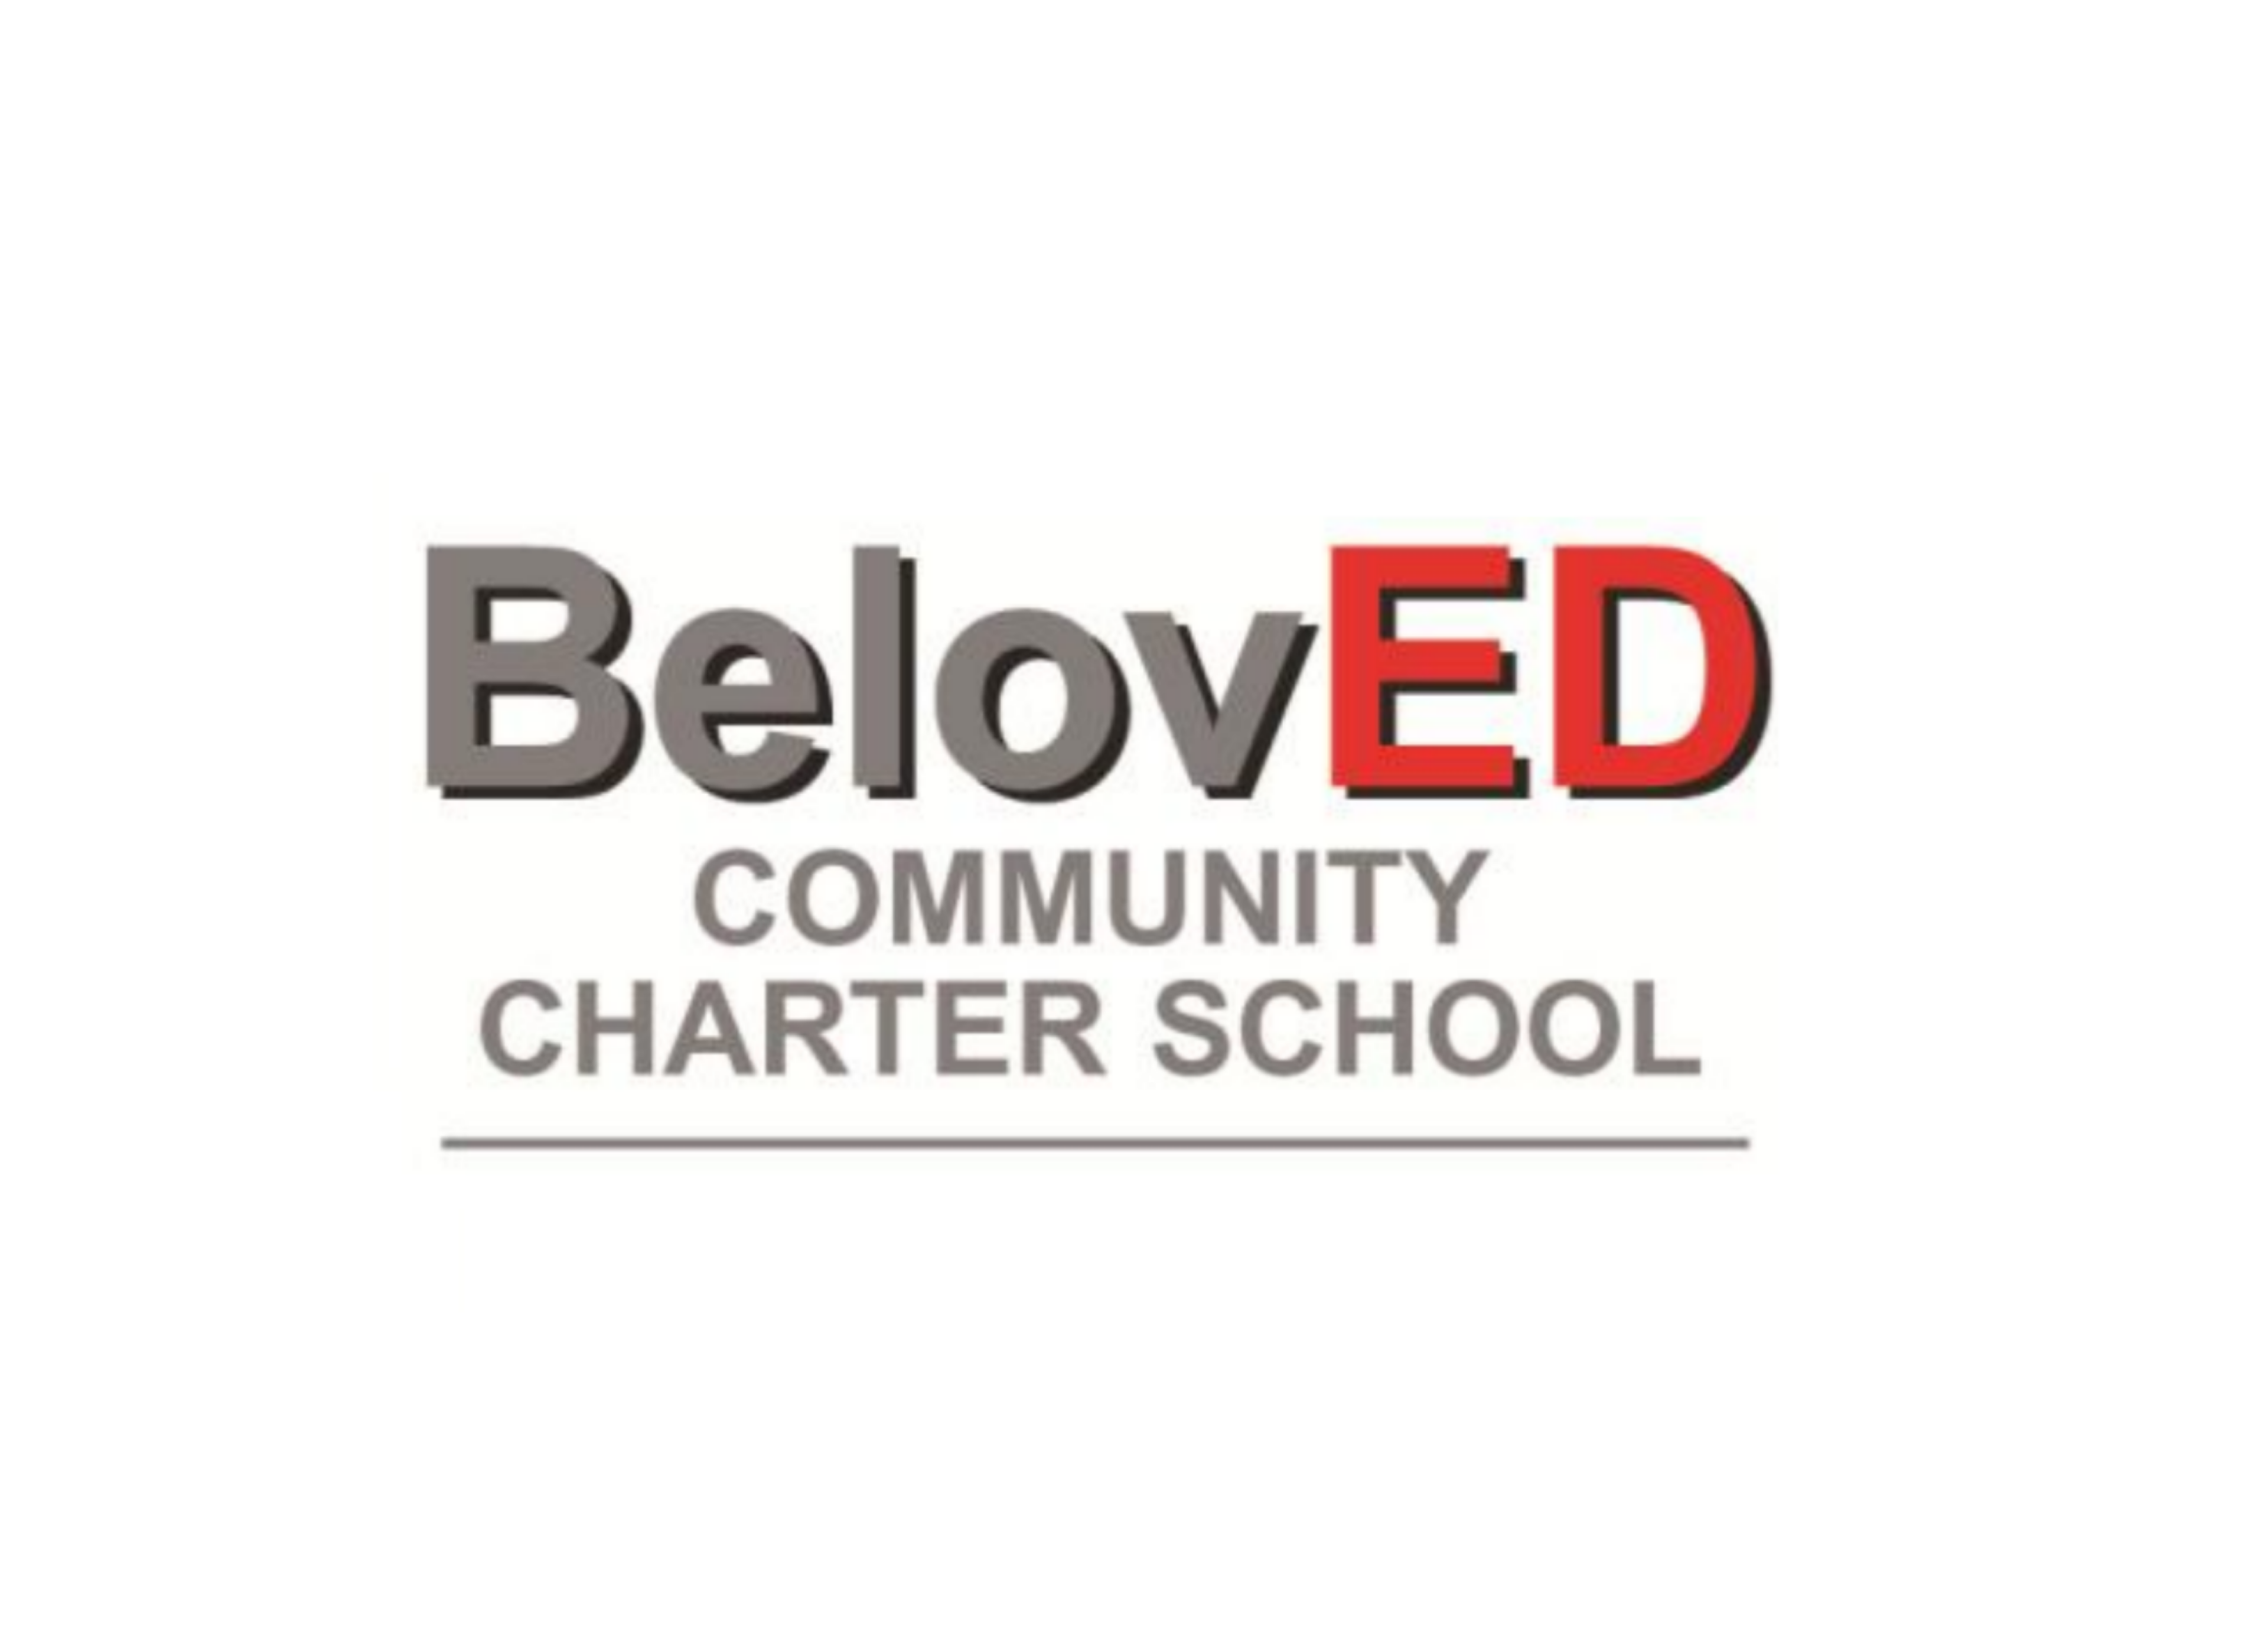 Beloved Charter School logo